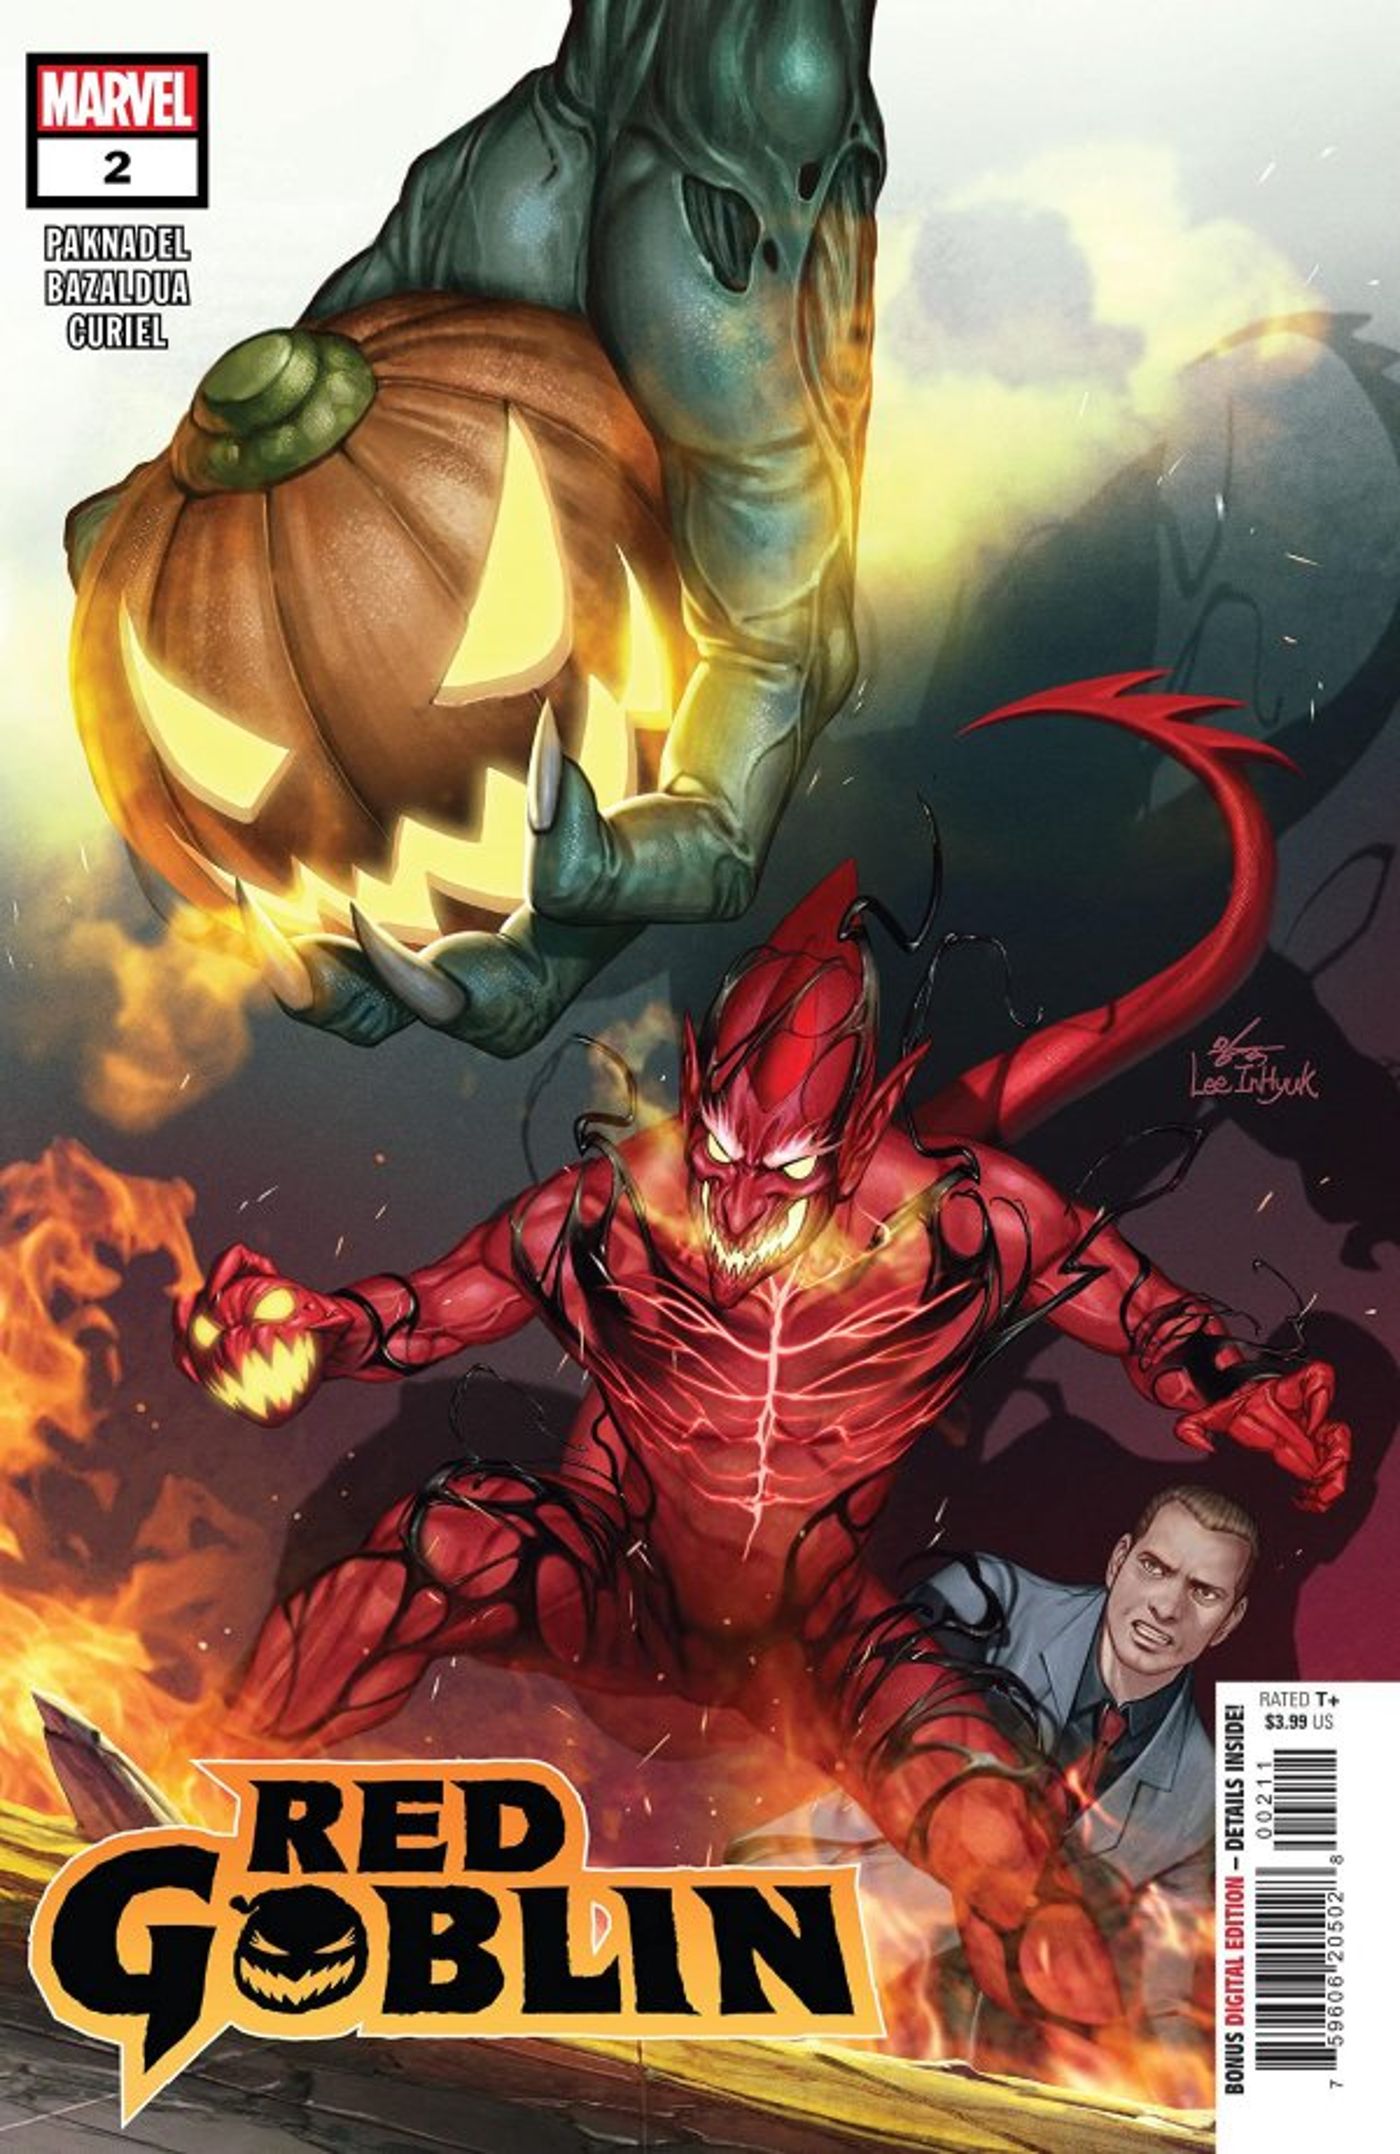 Cover for Red Goblin #2 (InHyuk Lee)